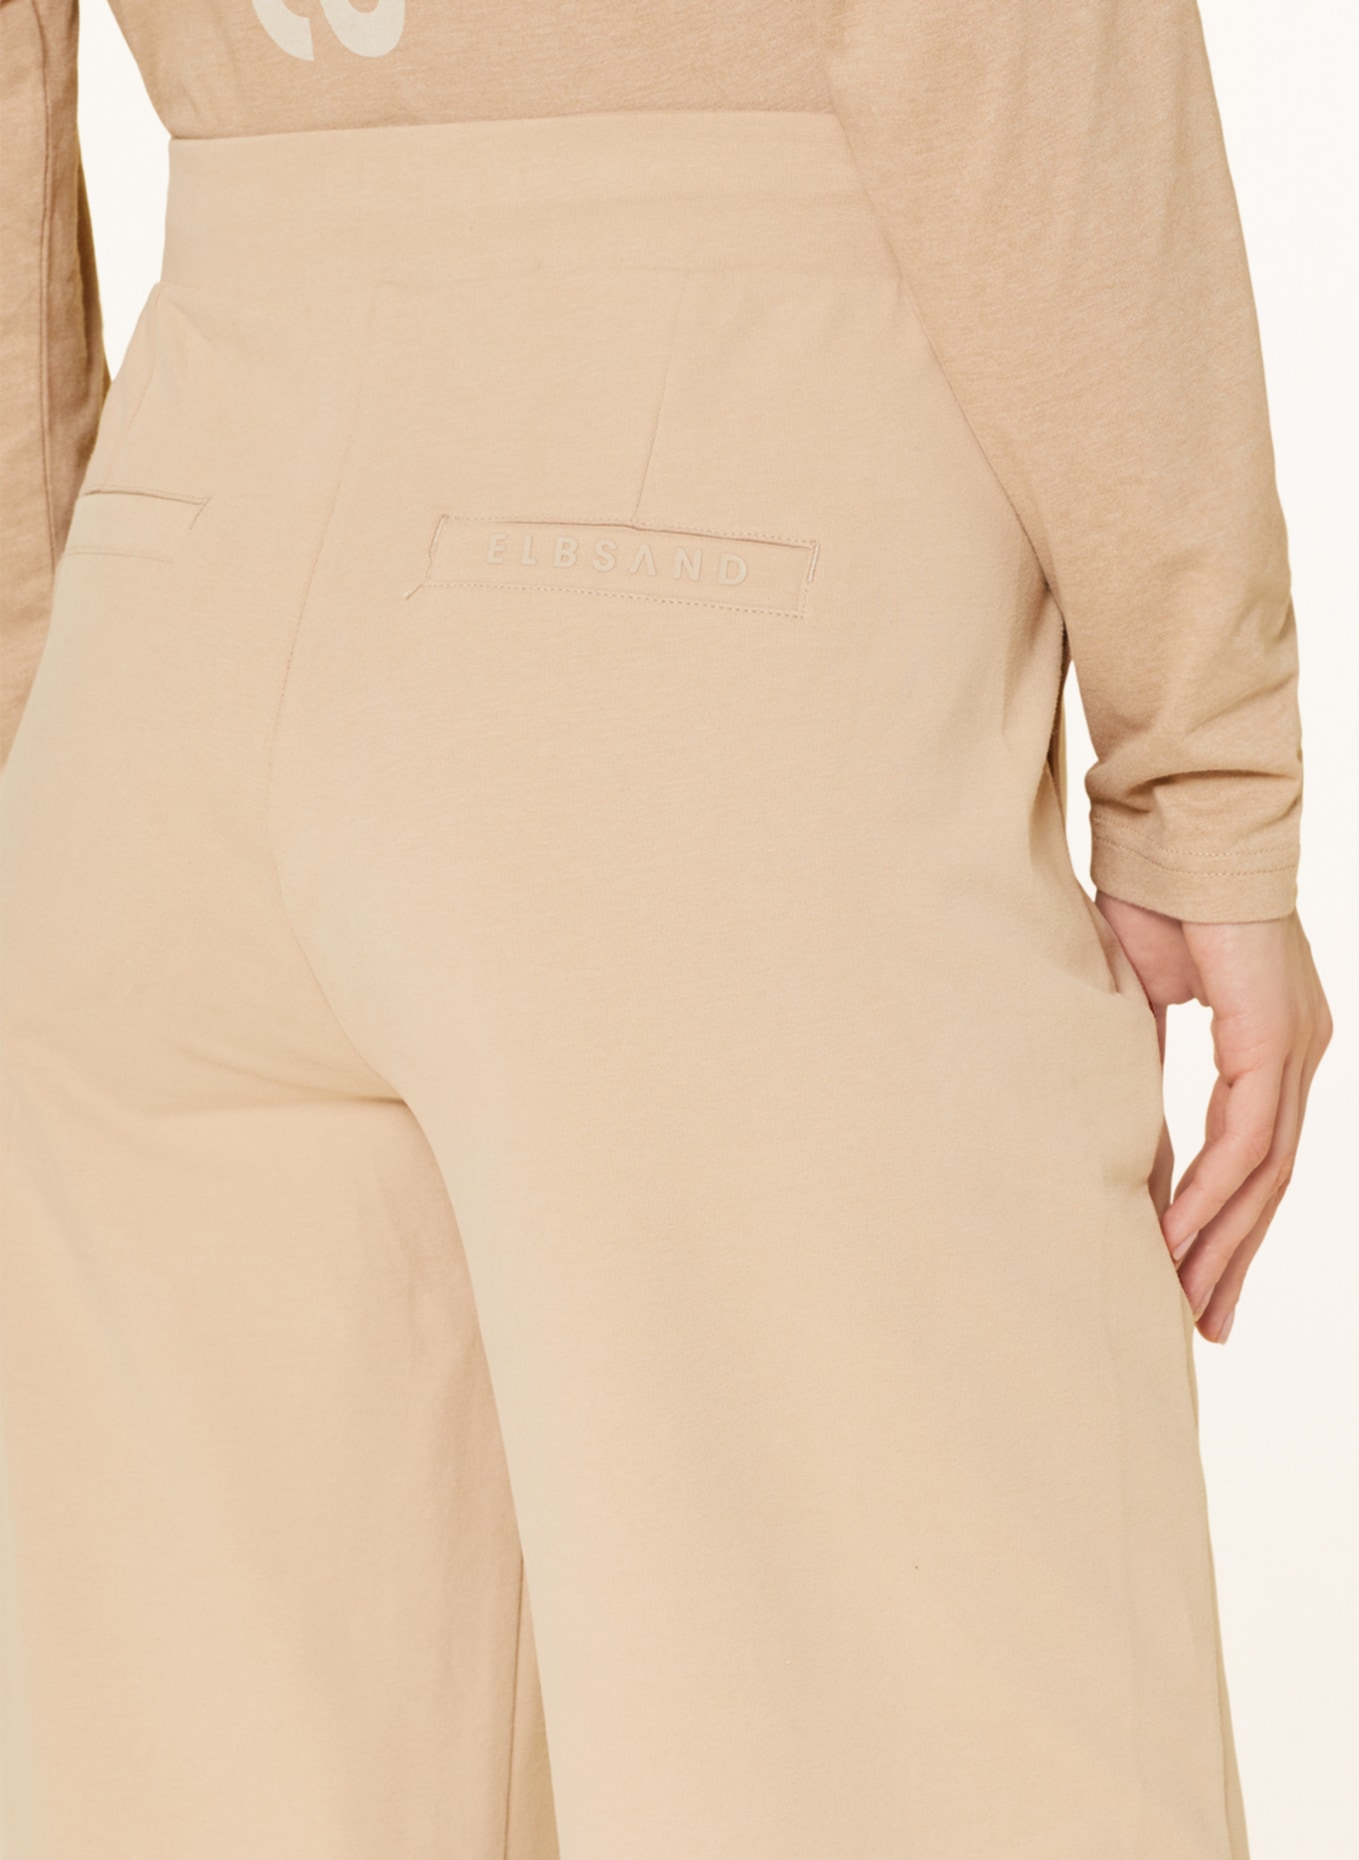 ELBSAND Sweatpants NEAH, Color: LIGHT BROWN (Image 5)